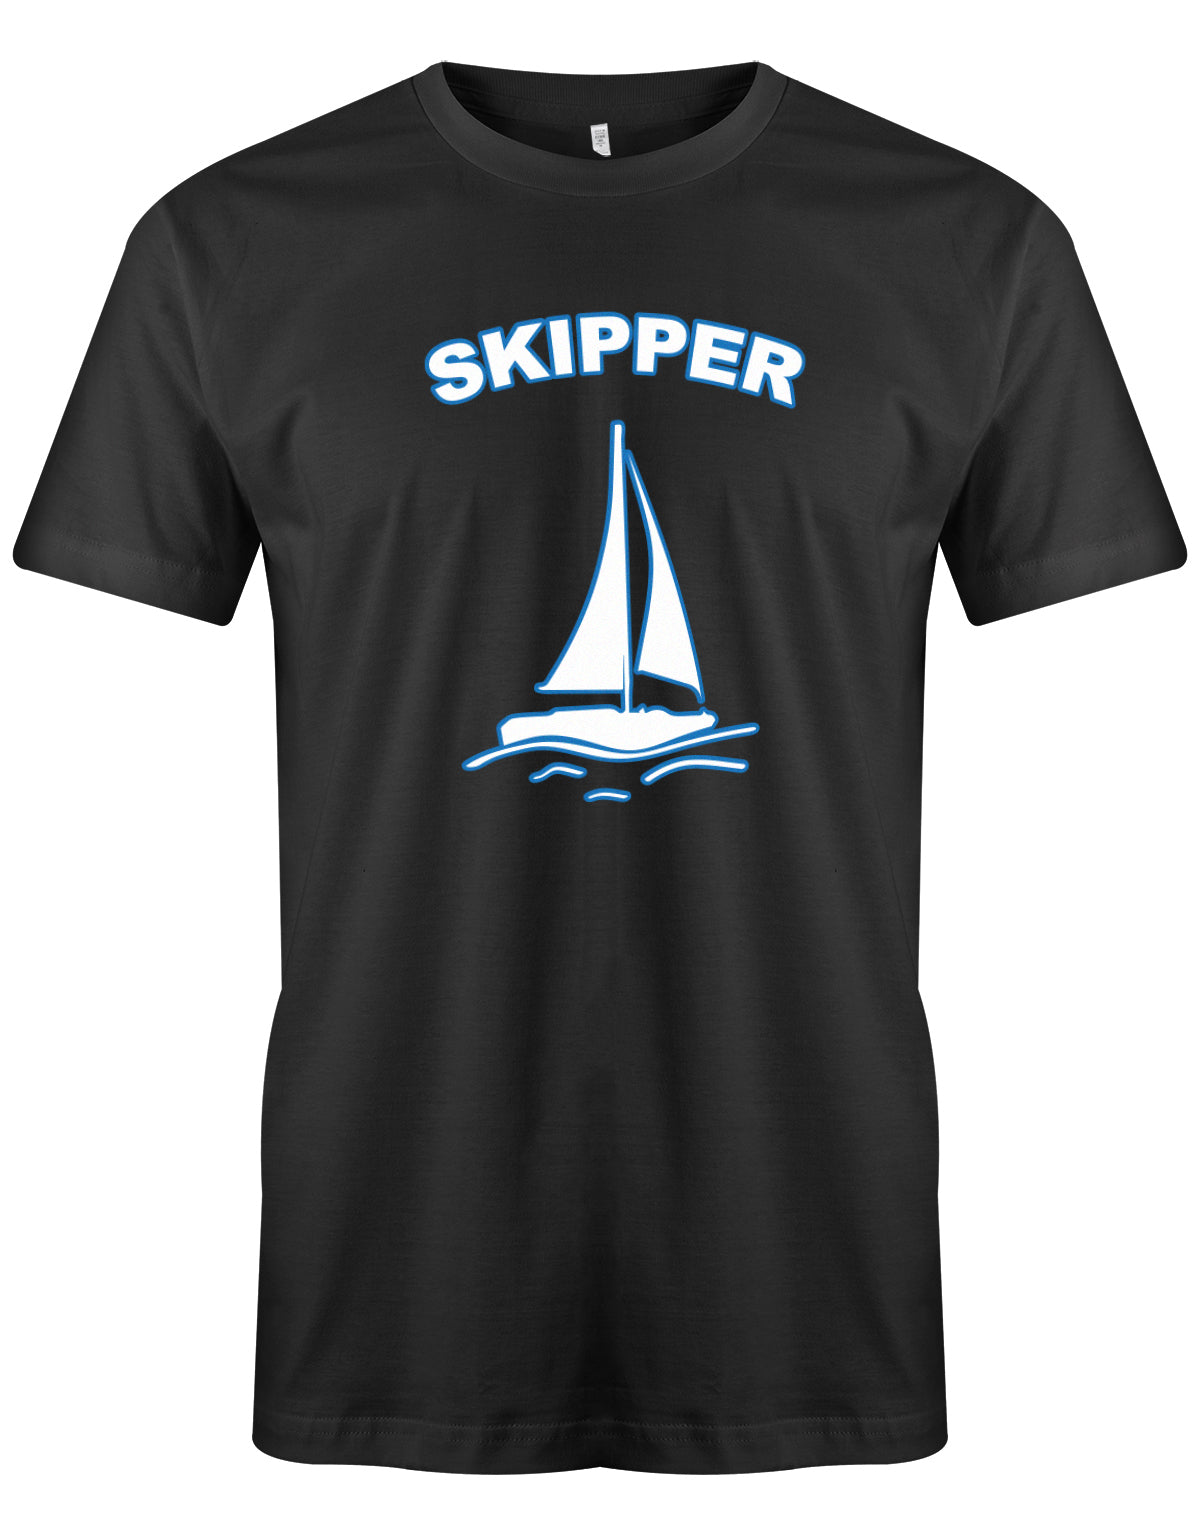 Skipper Segler - Segeln - Herren T-Shirt SChwarz